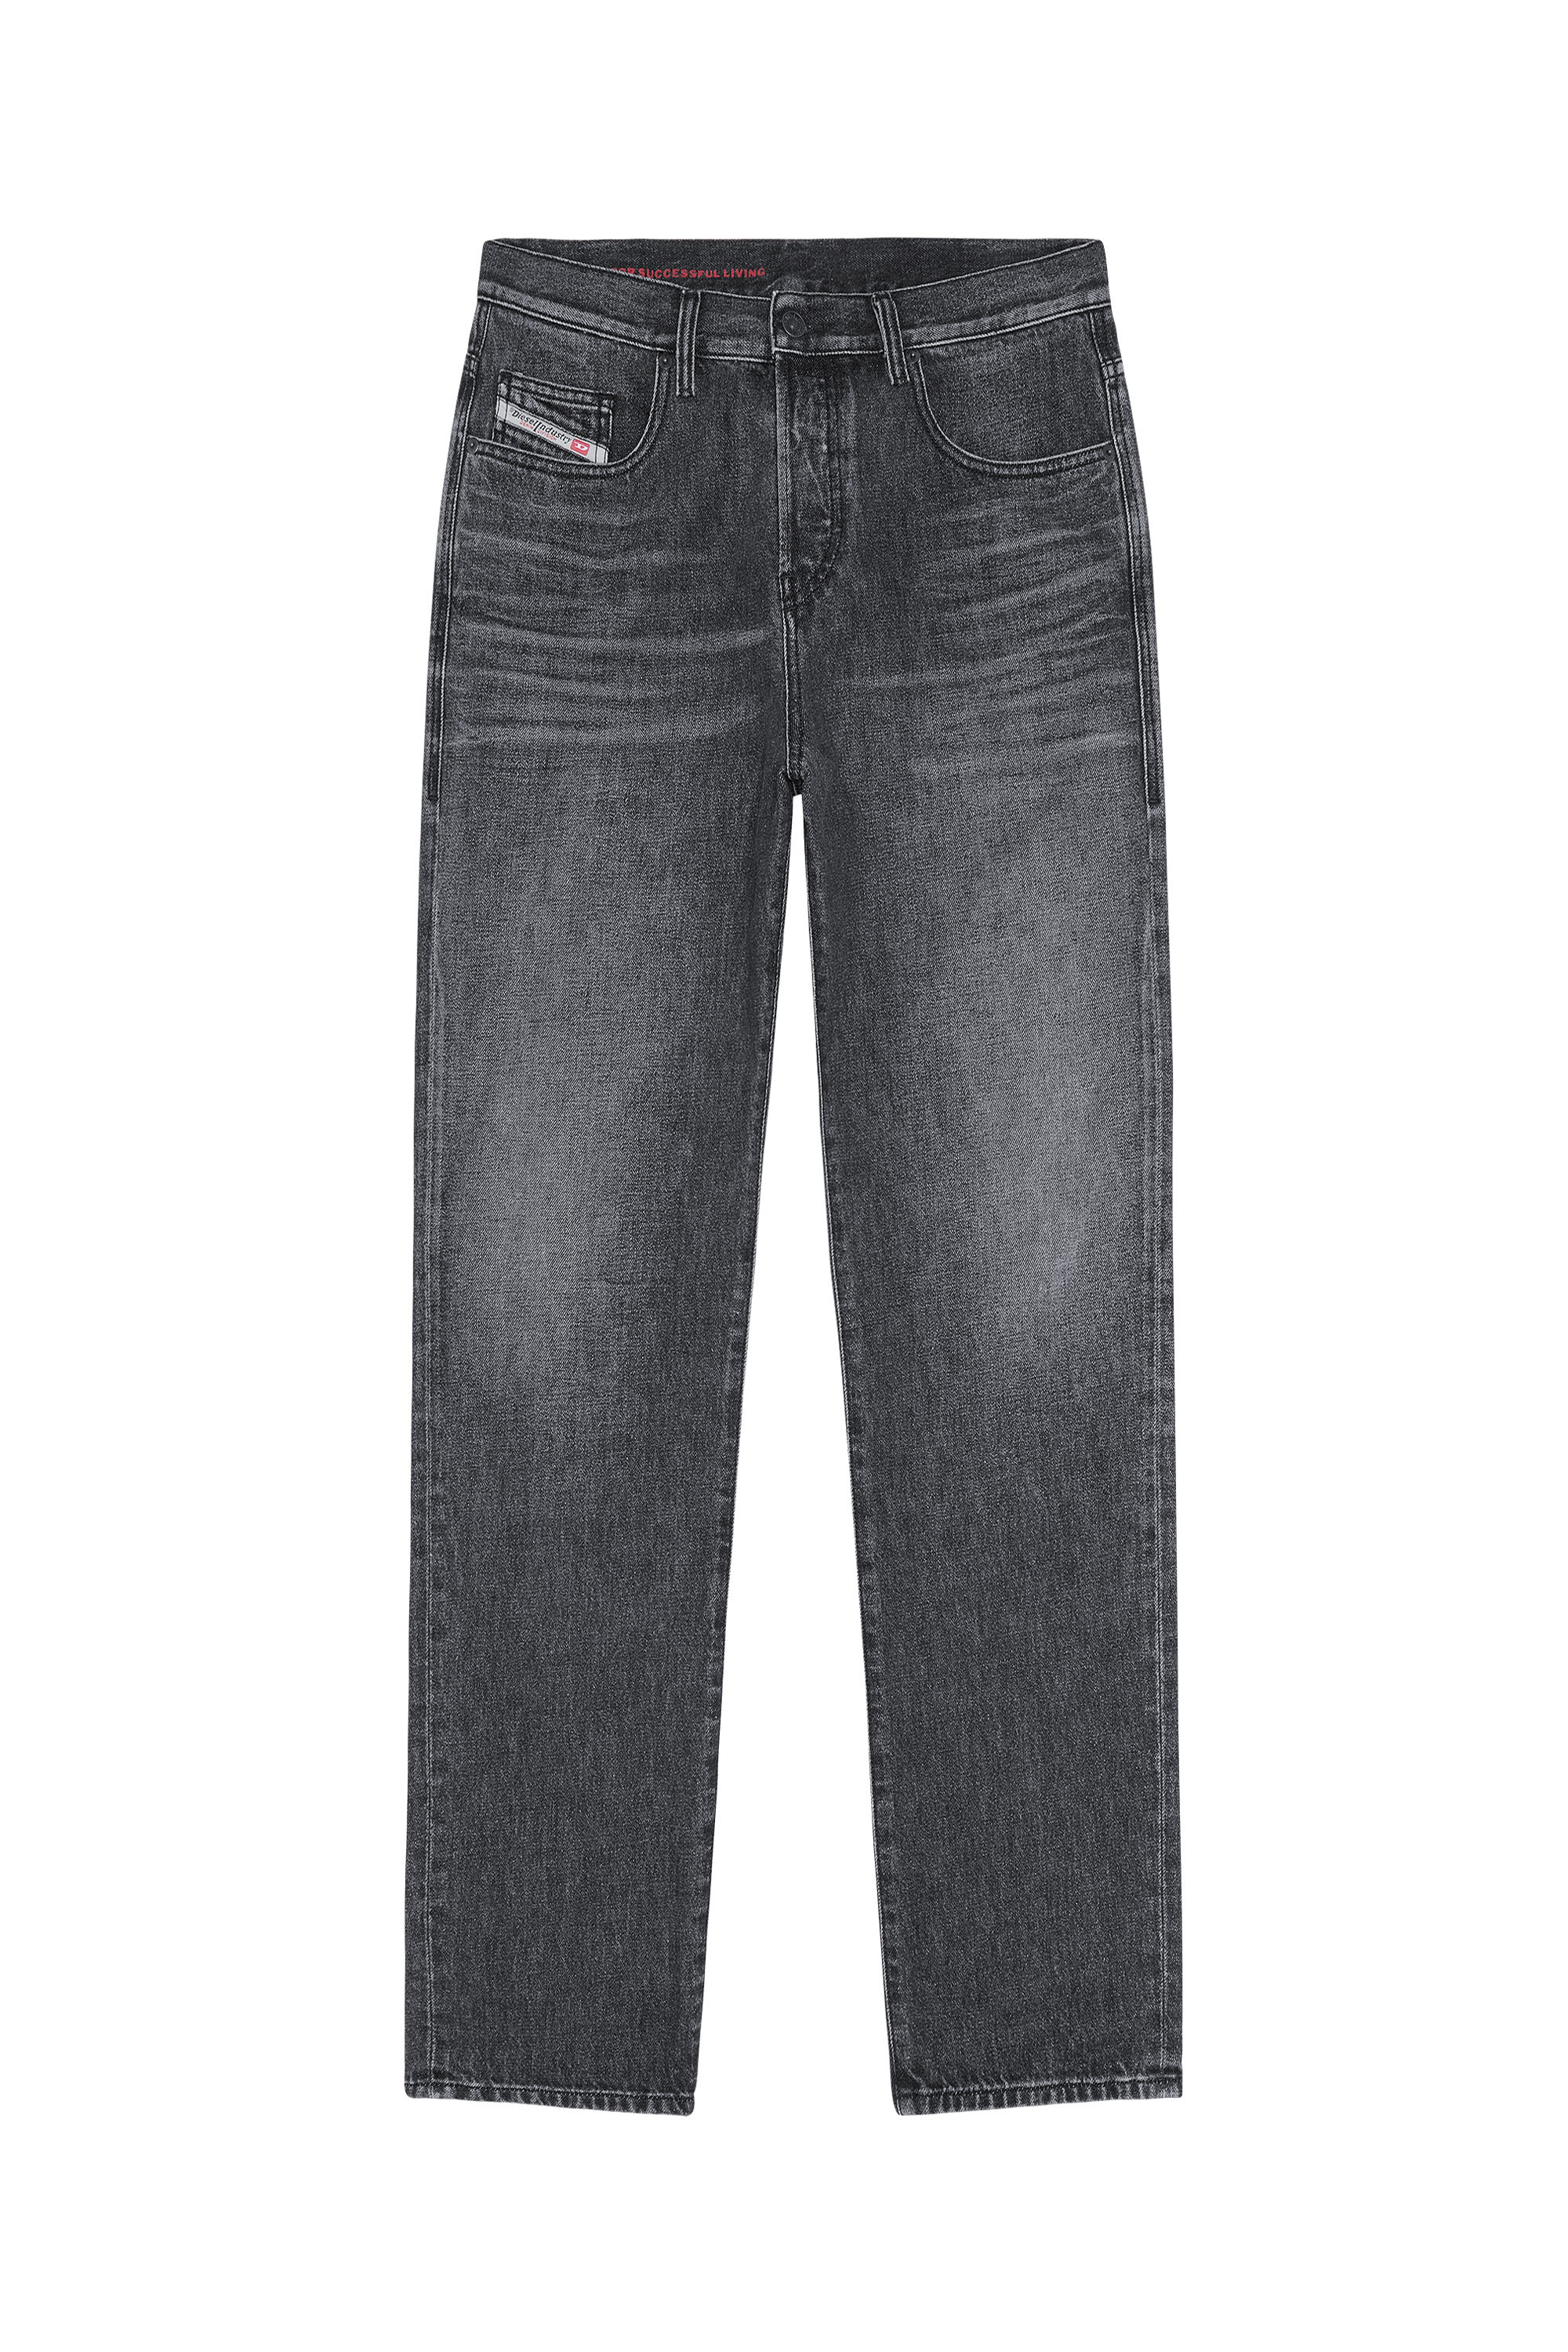 2020 D-VIKER 007C4 Straight Jeans, Nero/Grigio scuro - Jeans